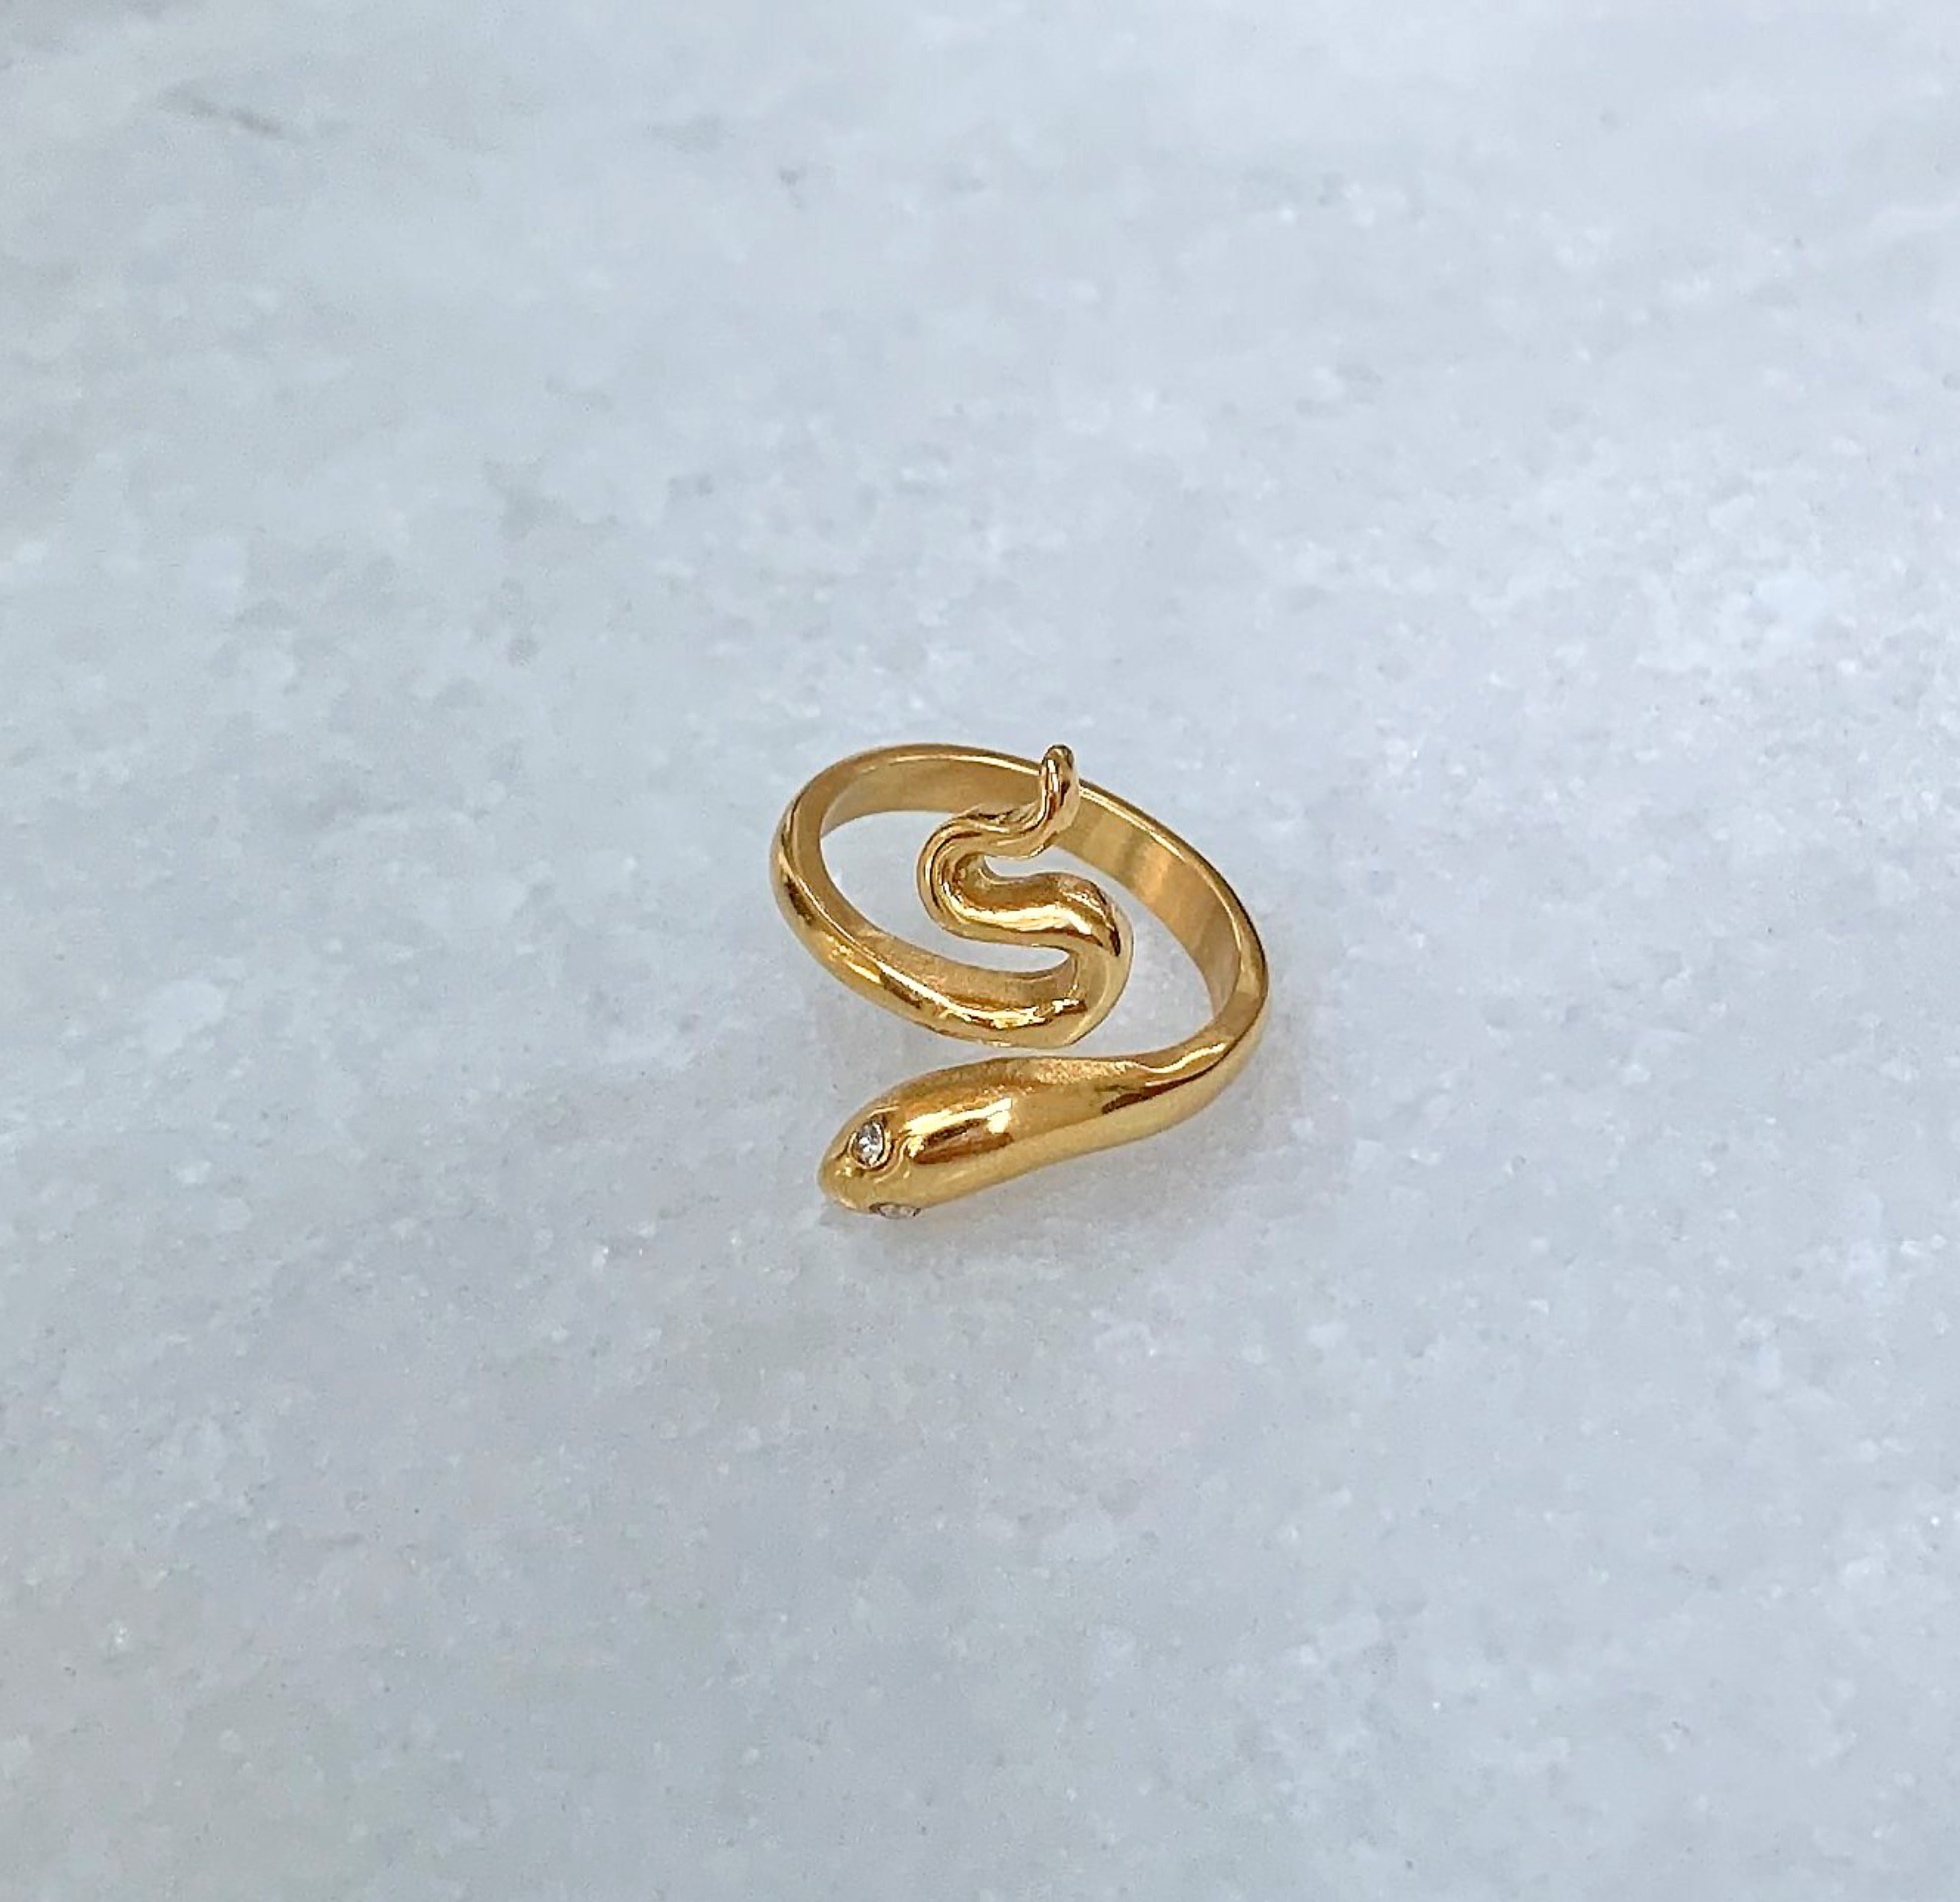 gold snake ring waterproof jewelry